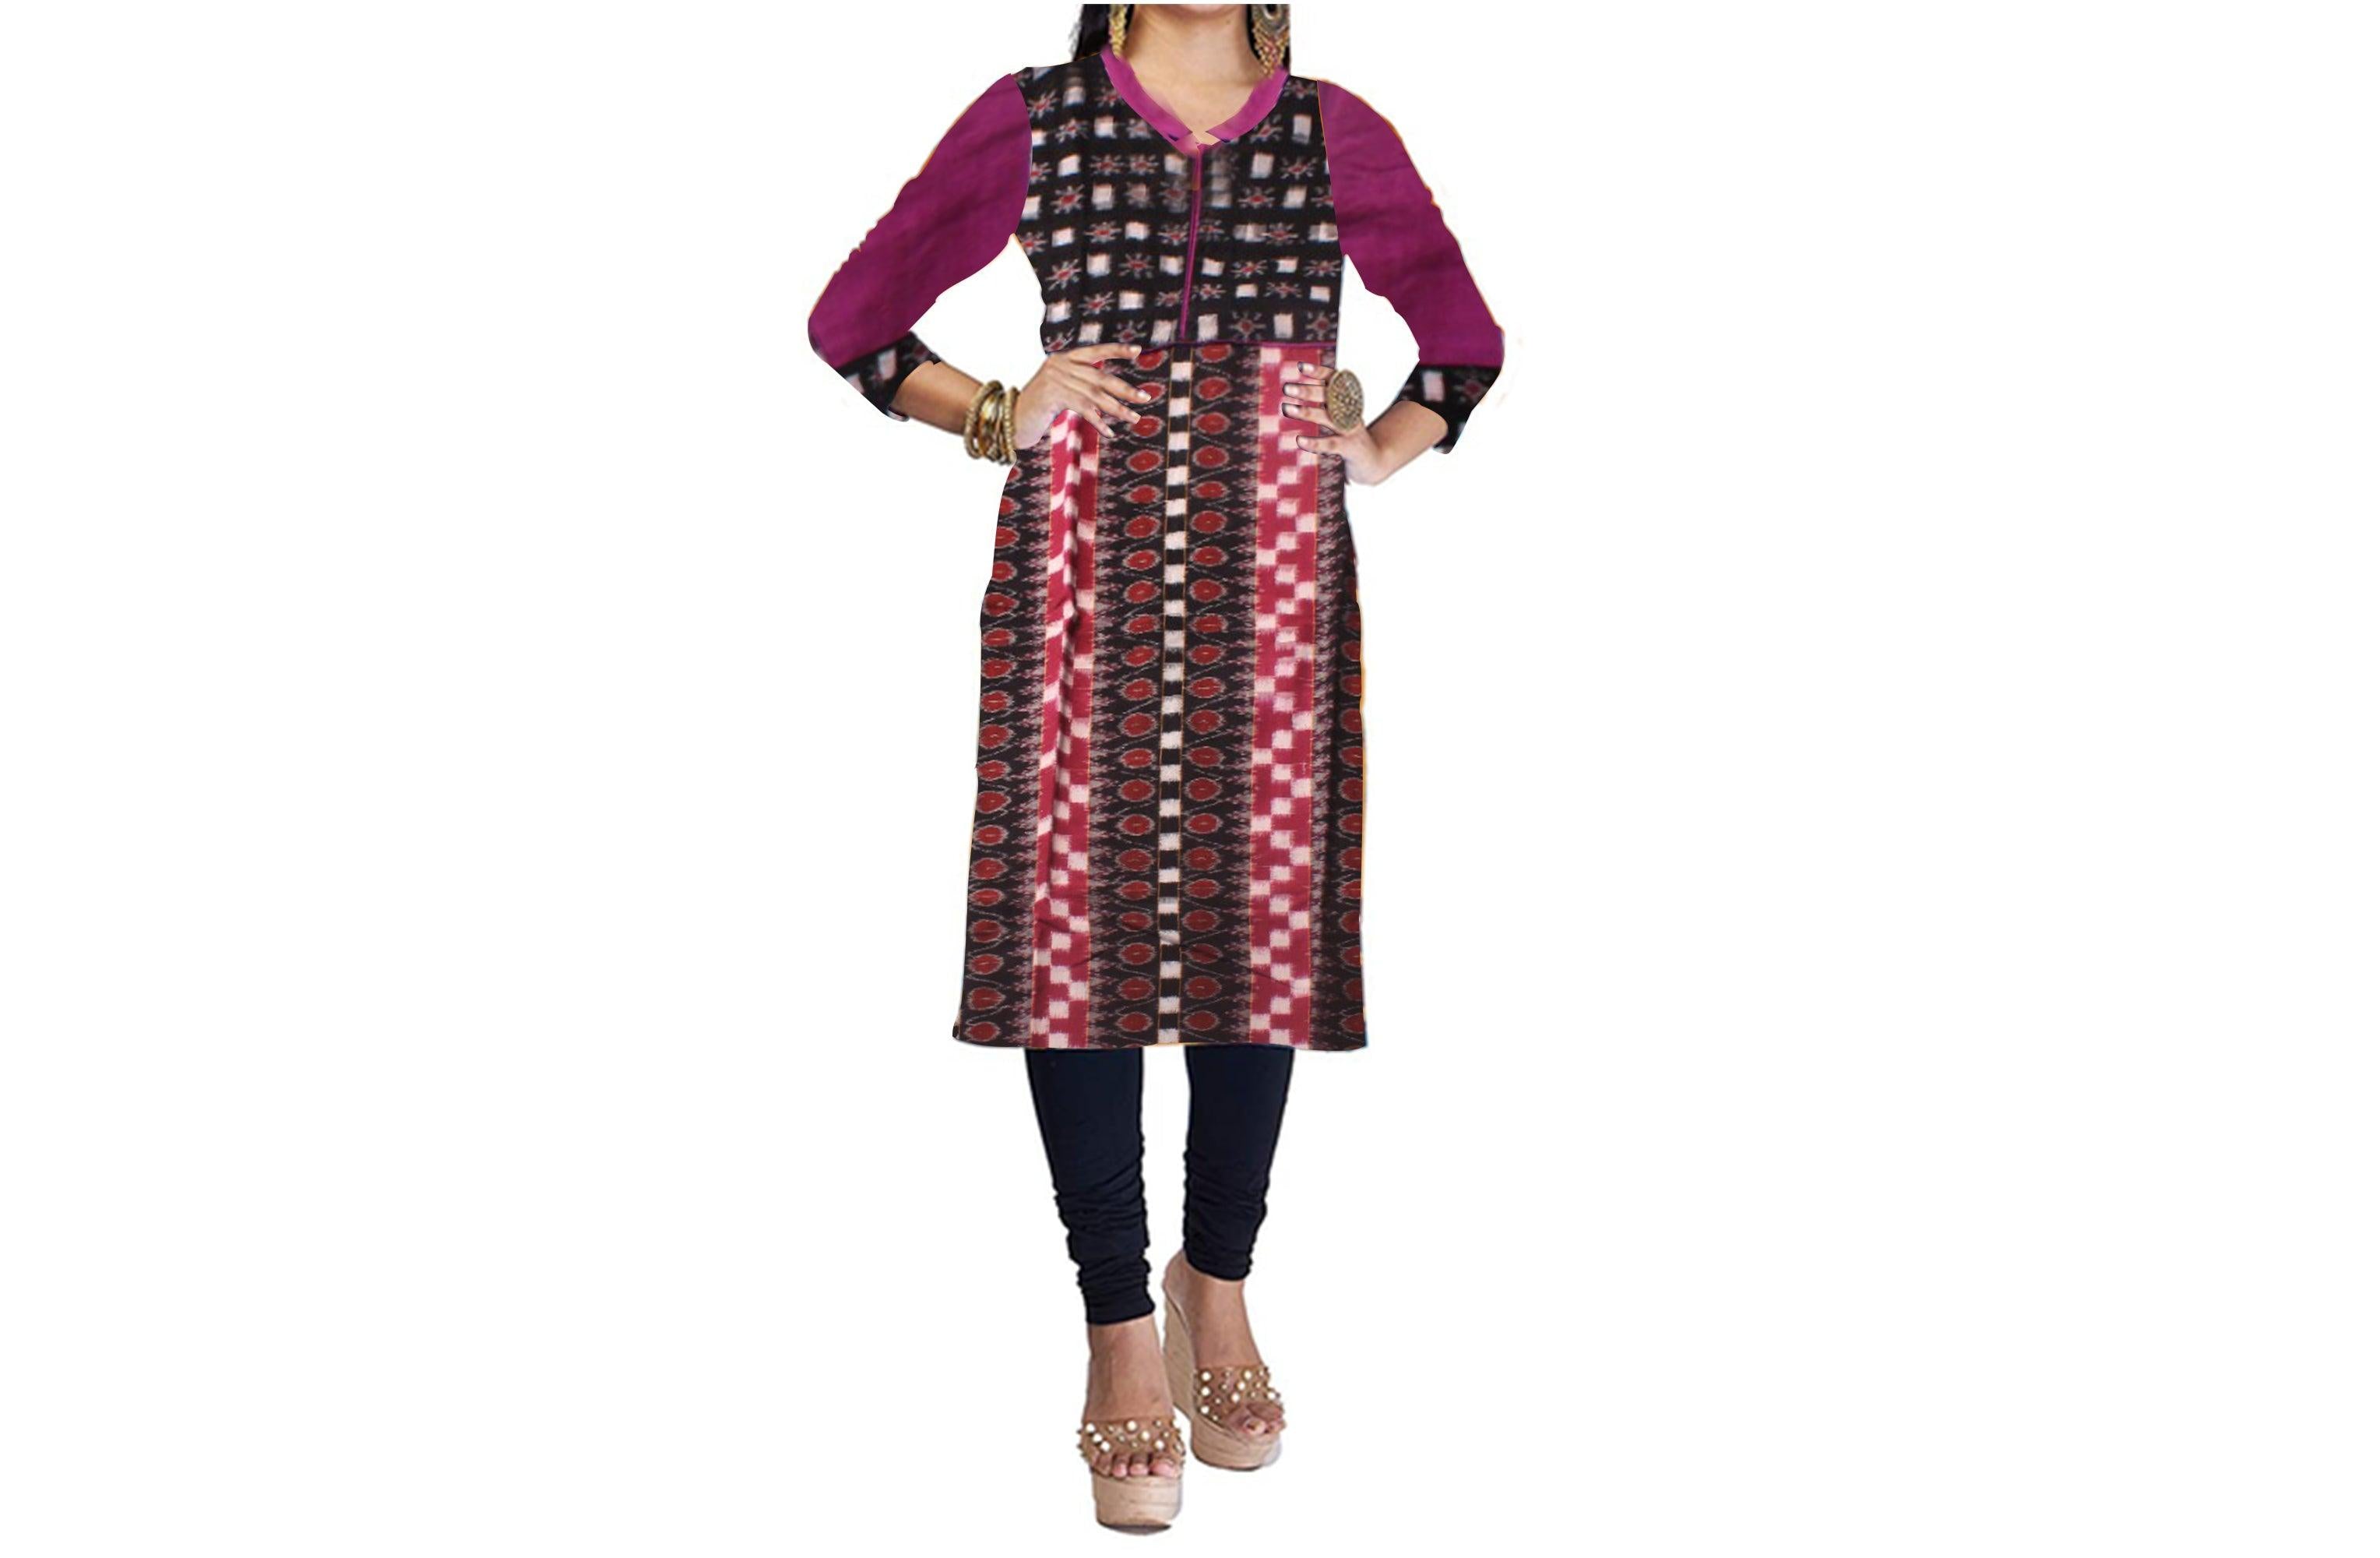 SAMBALPURI DESIGNER DRESS IN RED, MAROON AND PURPLE COLOR. - Koshali Arts & Crafts Enterprise